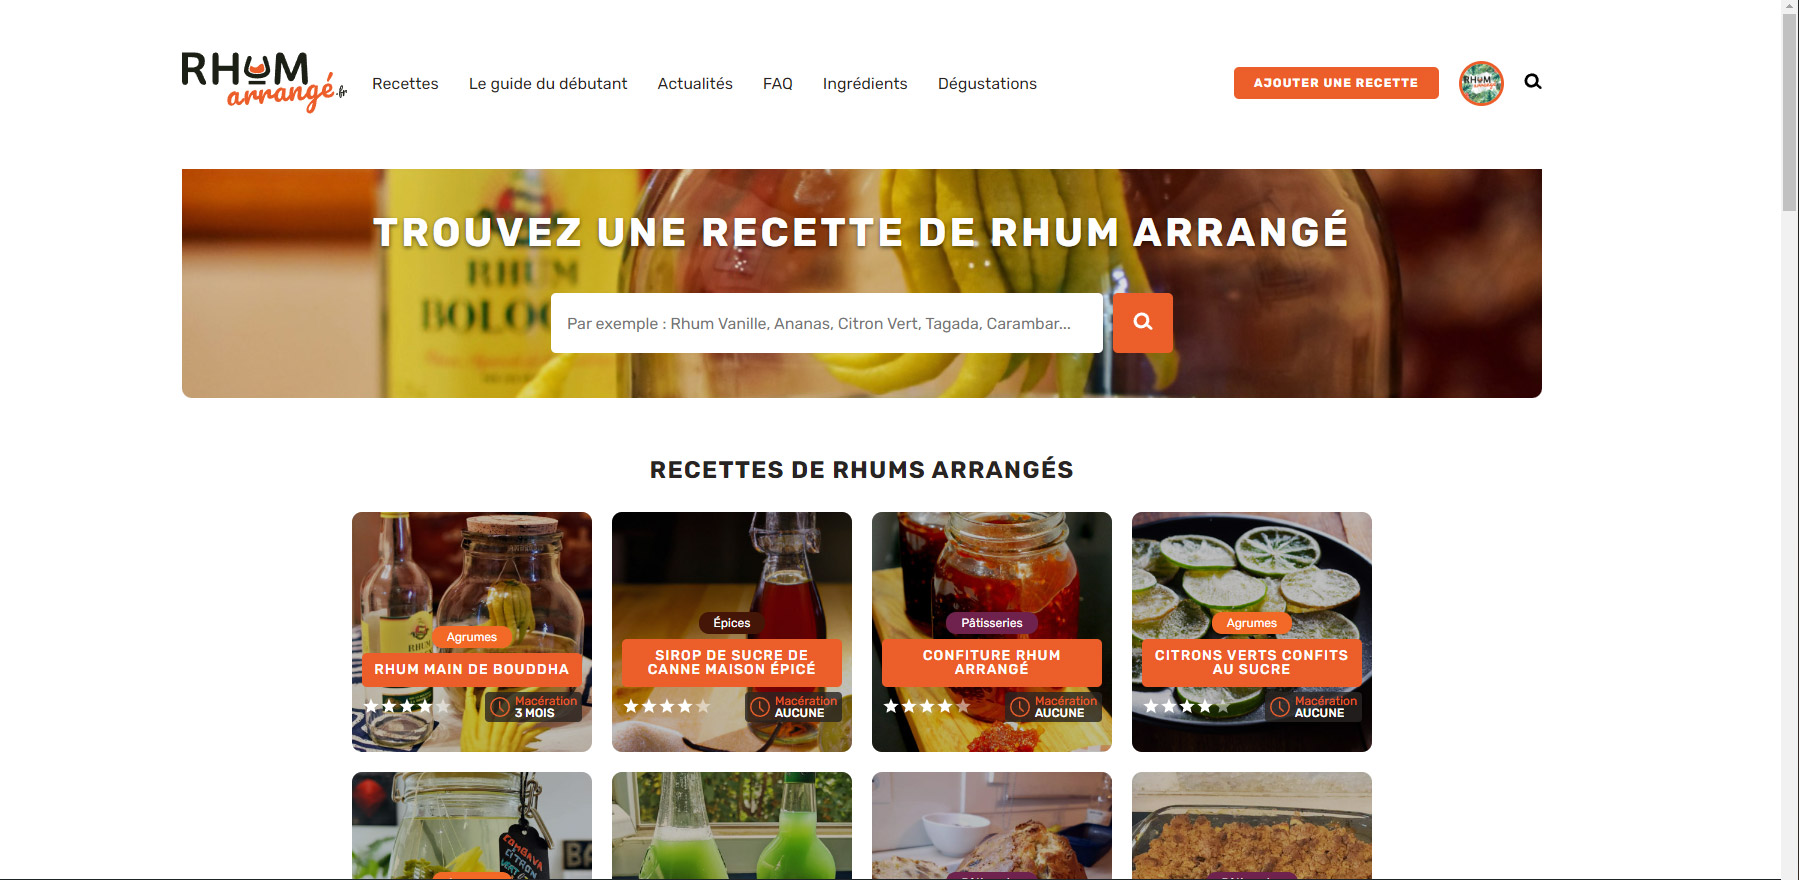 https://www.roels.fr/project/rhum-arrange-site-de-recettes/